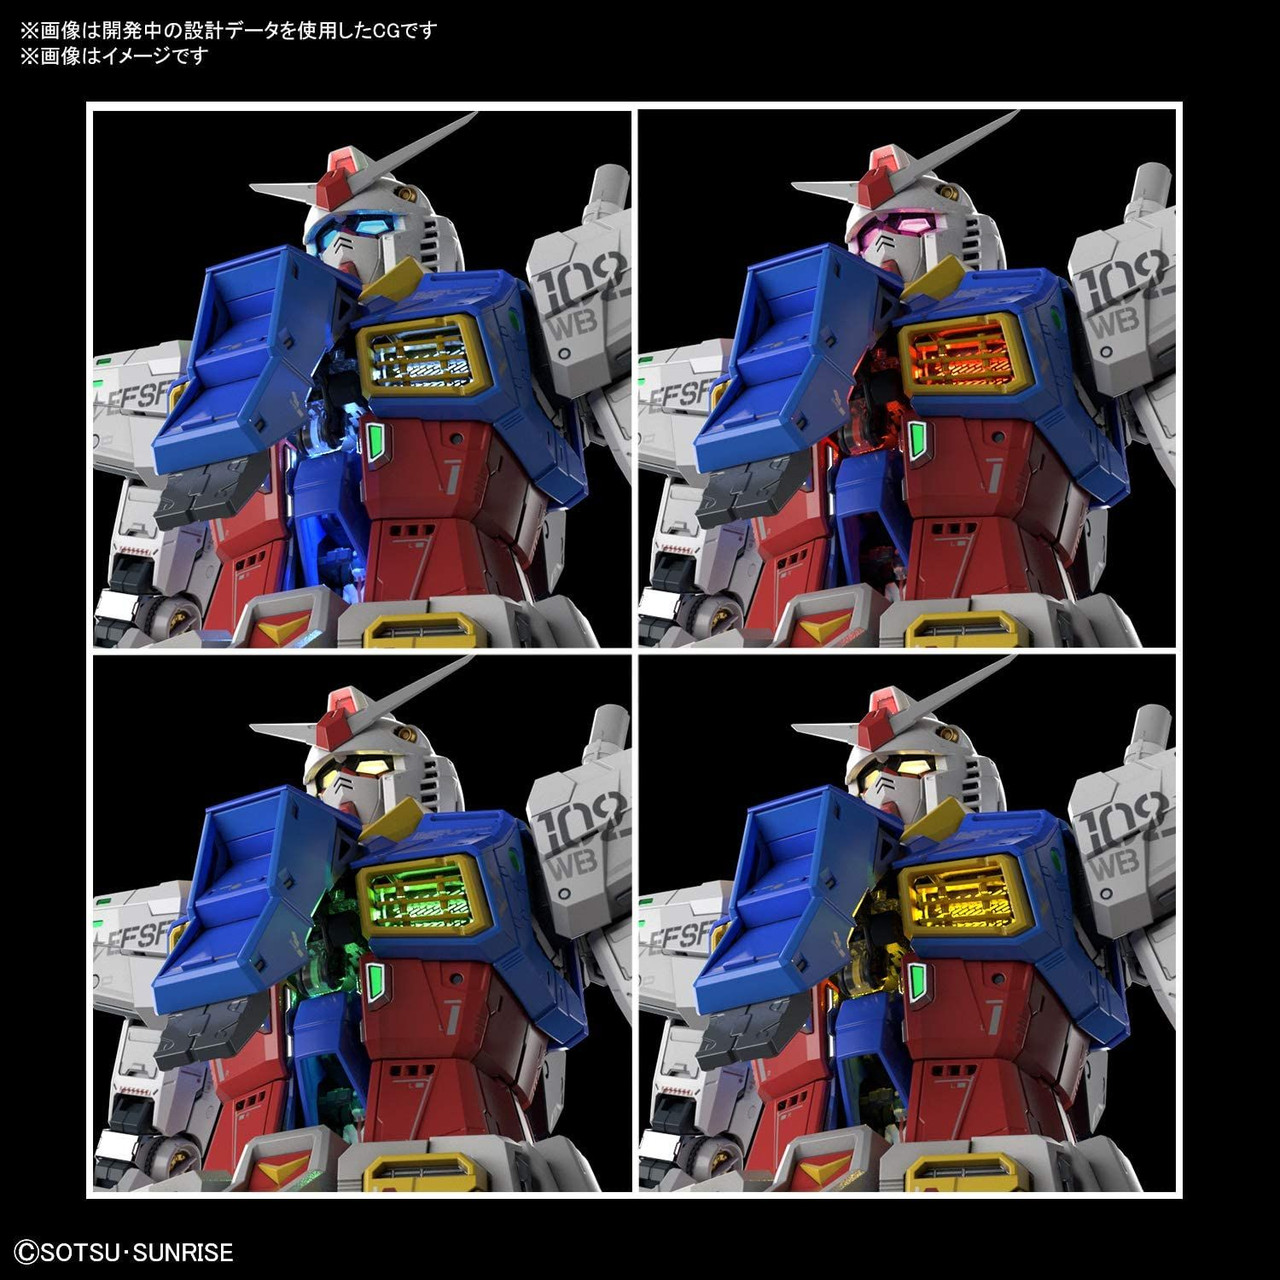 Perfect Grade 1 60 Unleashed Rx 78 2 Gundam Plastic Model